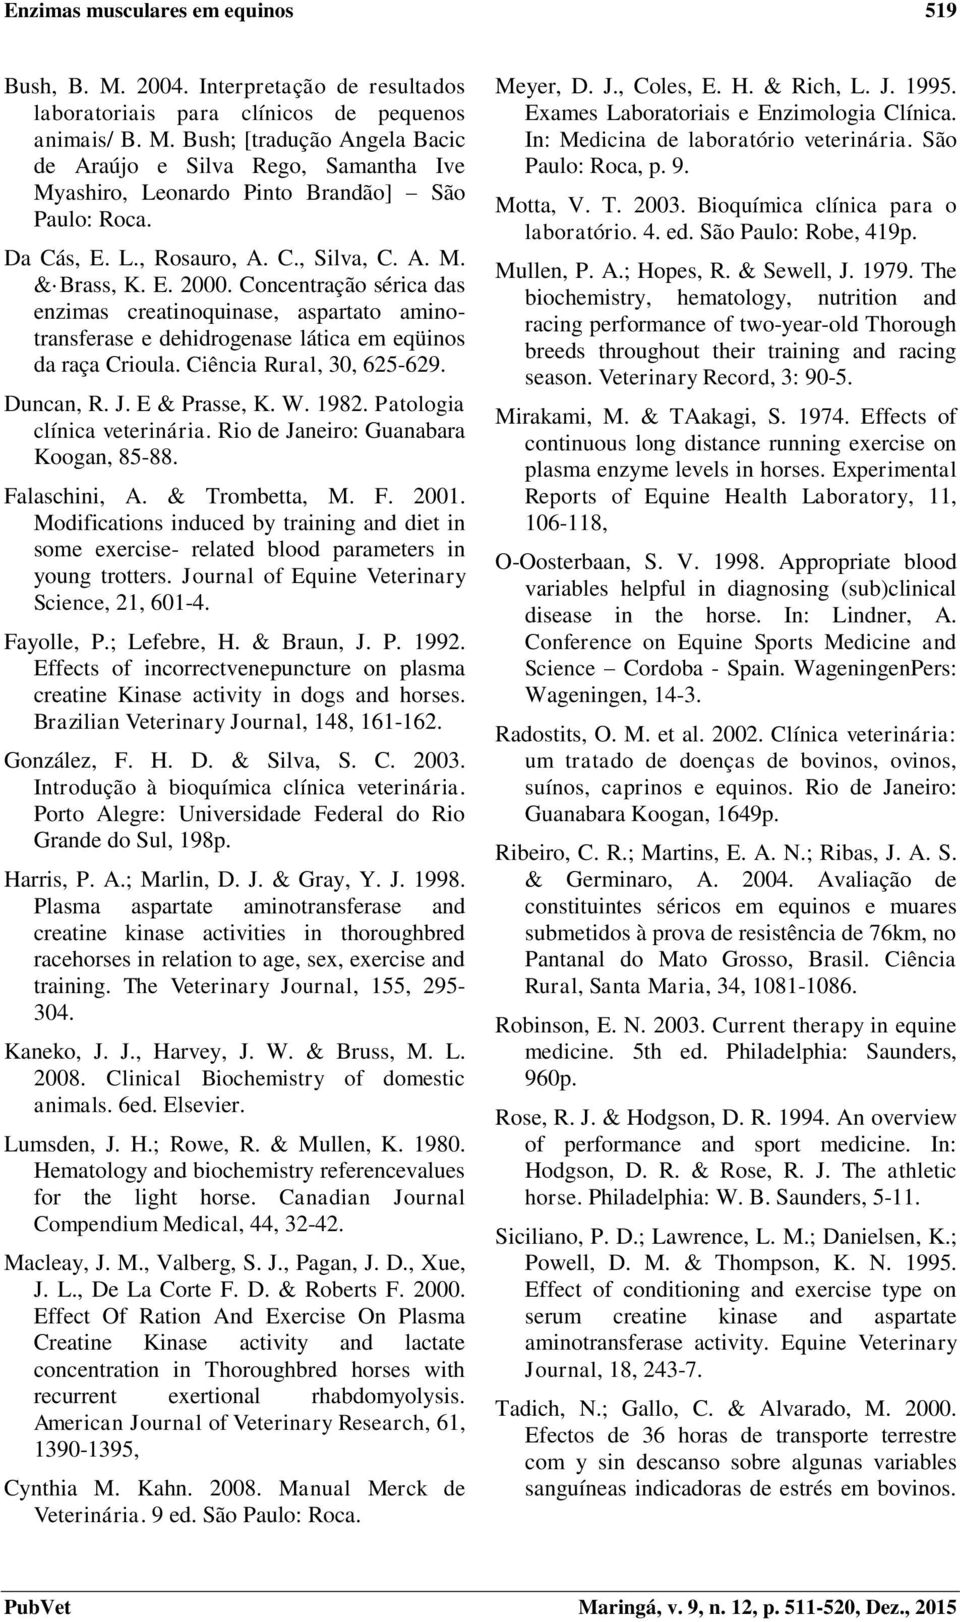 Ciência Rural, 30, 625-629. Duncan, R. J. E & Prasse, K. W. 1982. Patologia clínica veterinária. Rio de Janeiro: Guanabara Koogan, 85-88. Falaschini, A. & Trombetta, M. F. 2001.